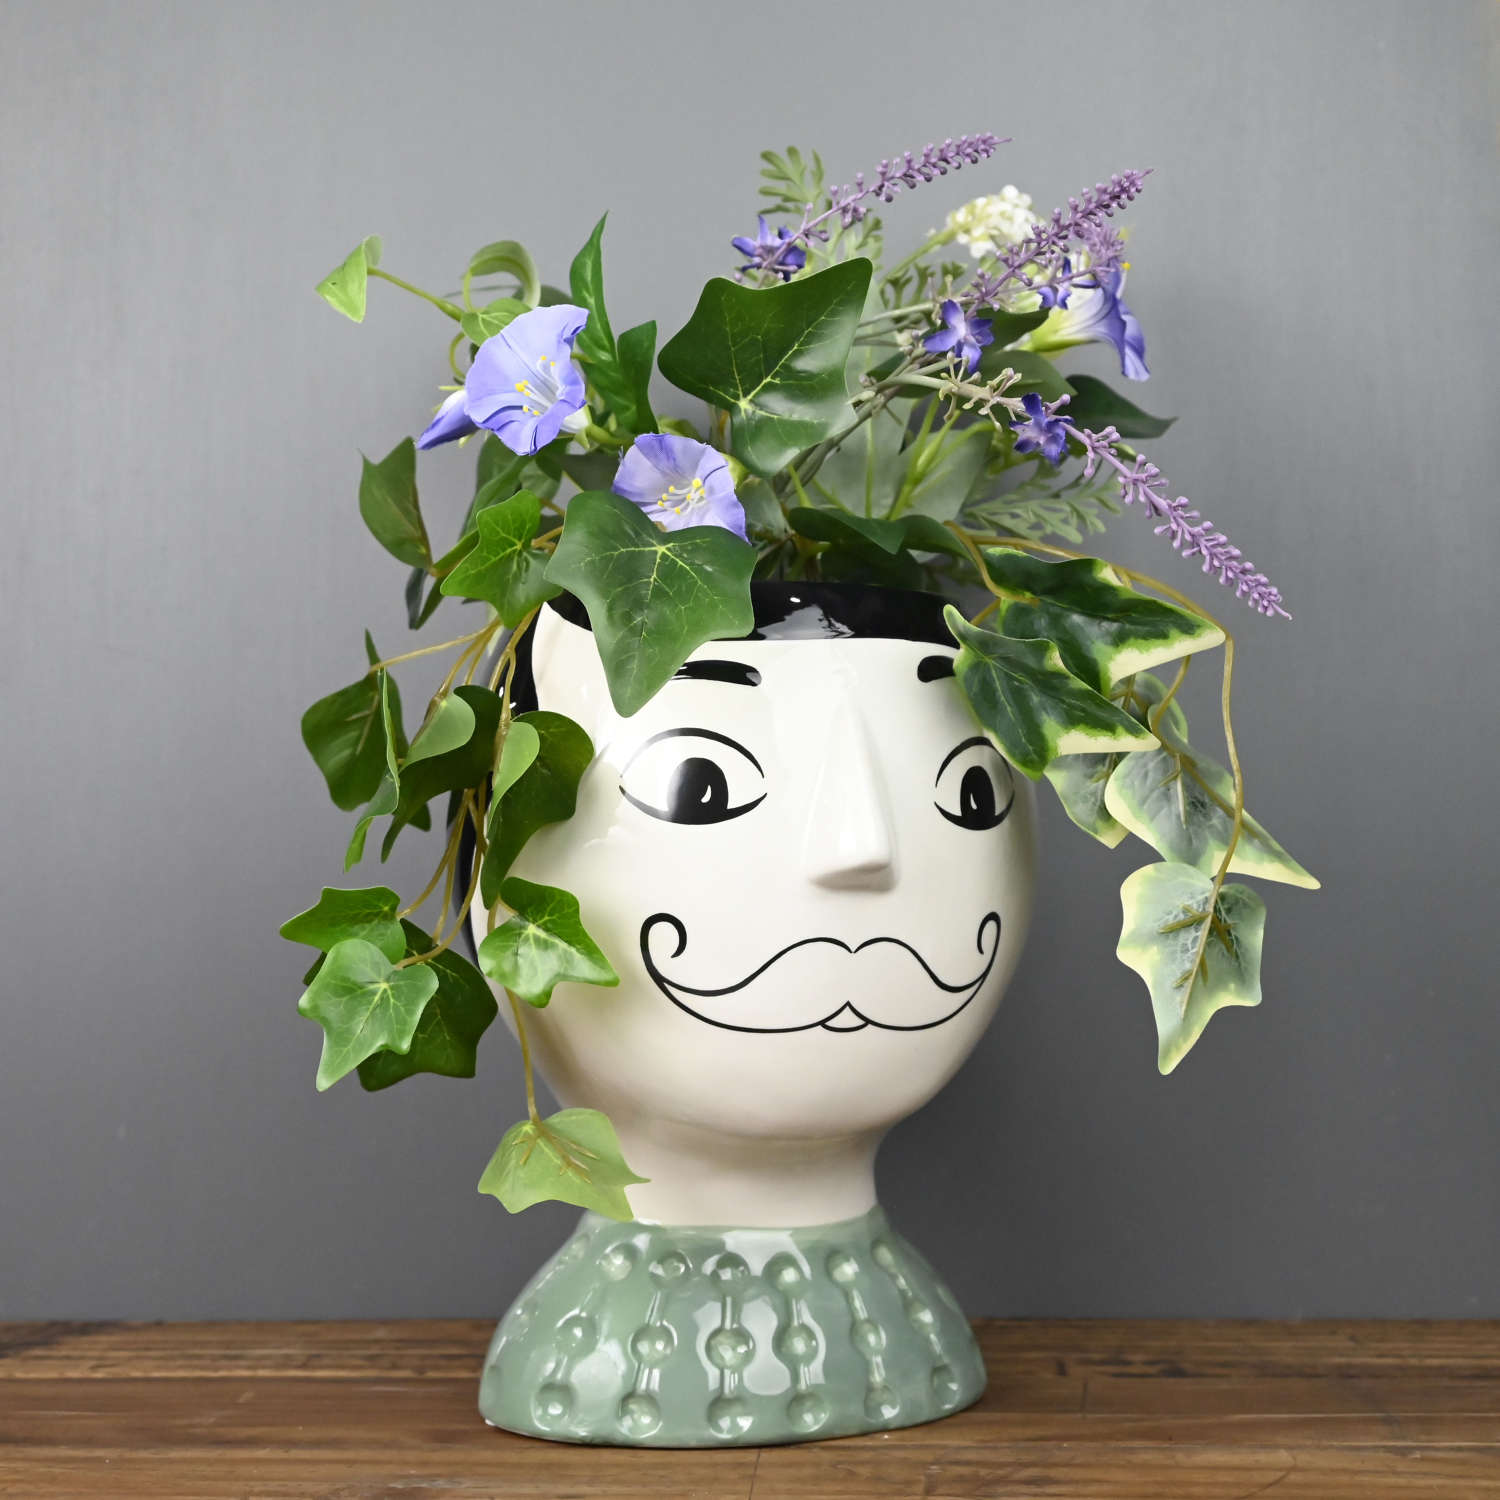 Ceramic Doodle Man face vase.